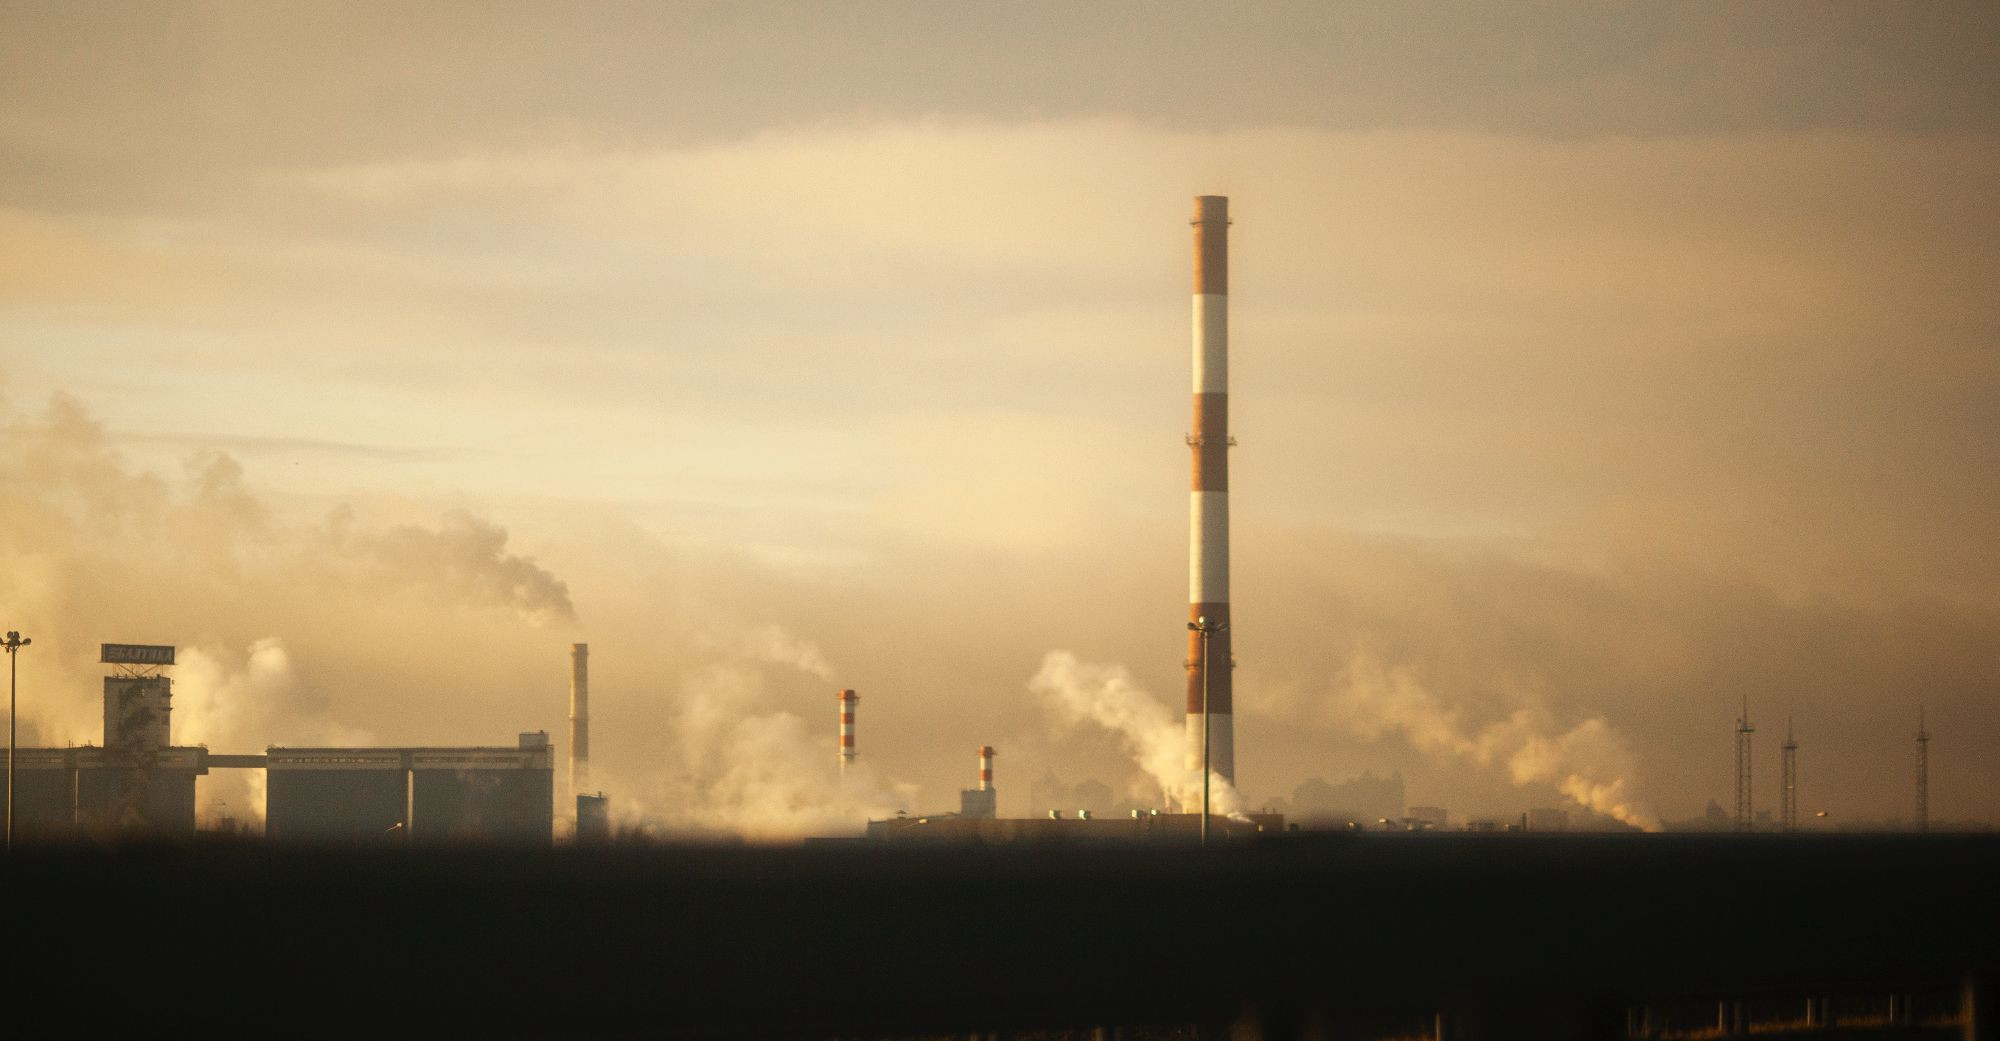 Emissions Trading Scheme